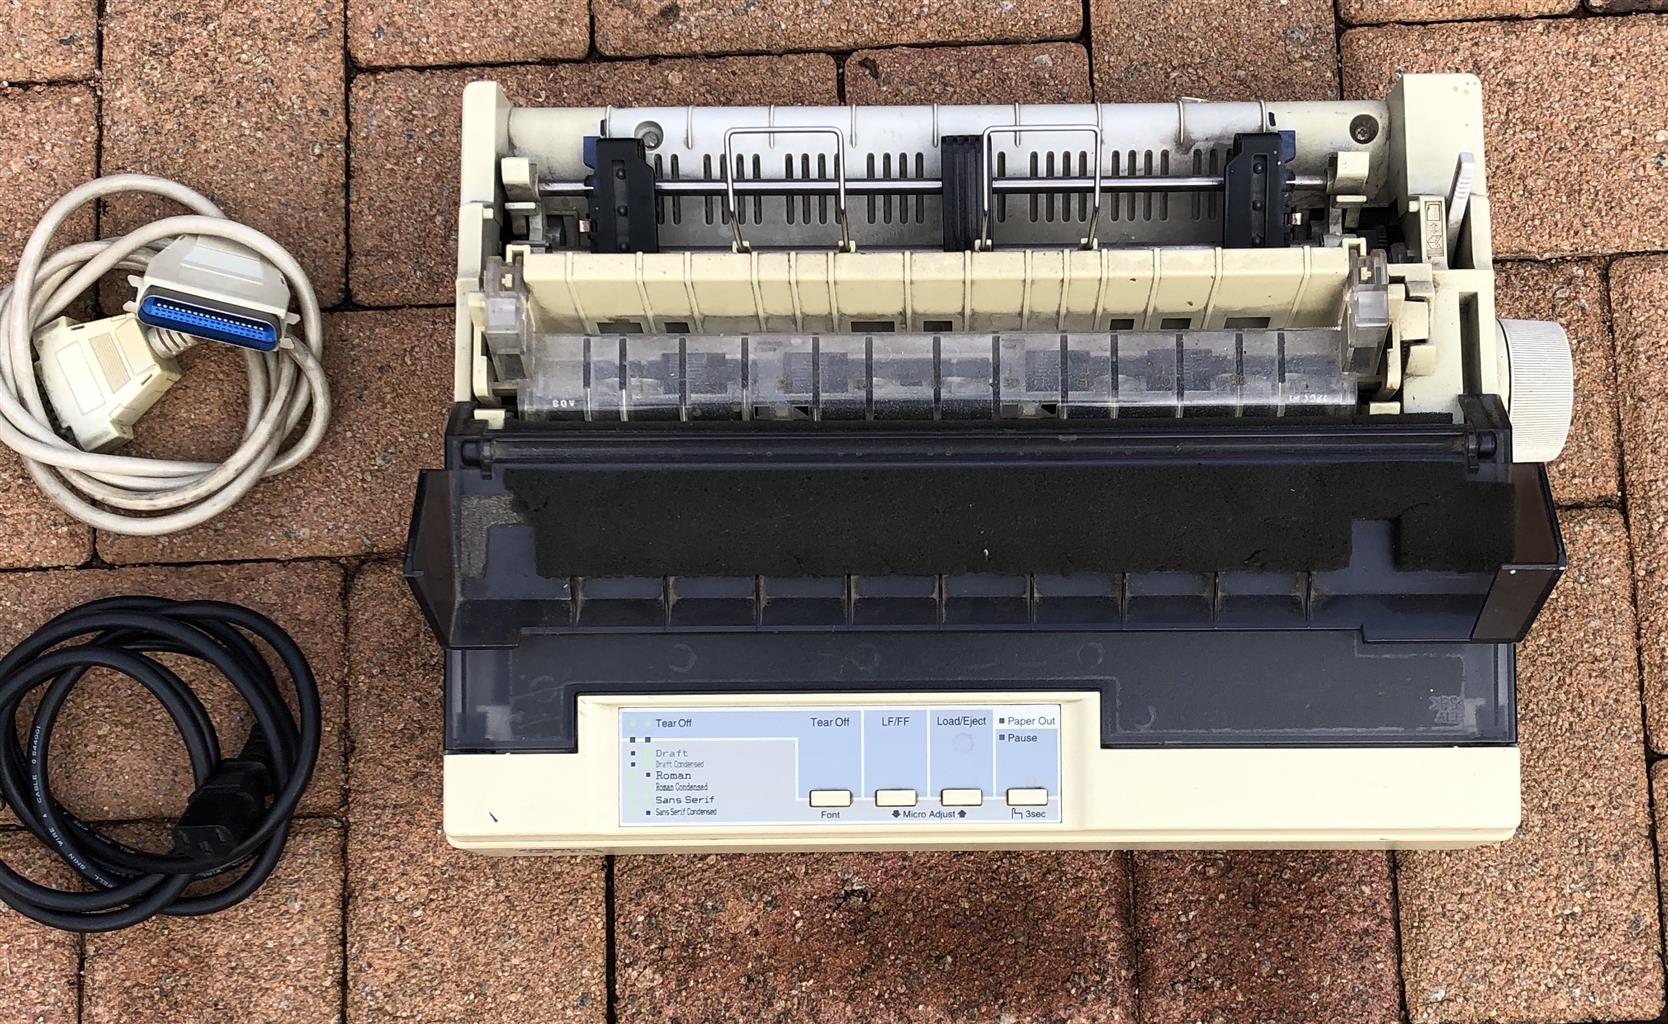 Epson printer LX-300+ model P170A